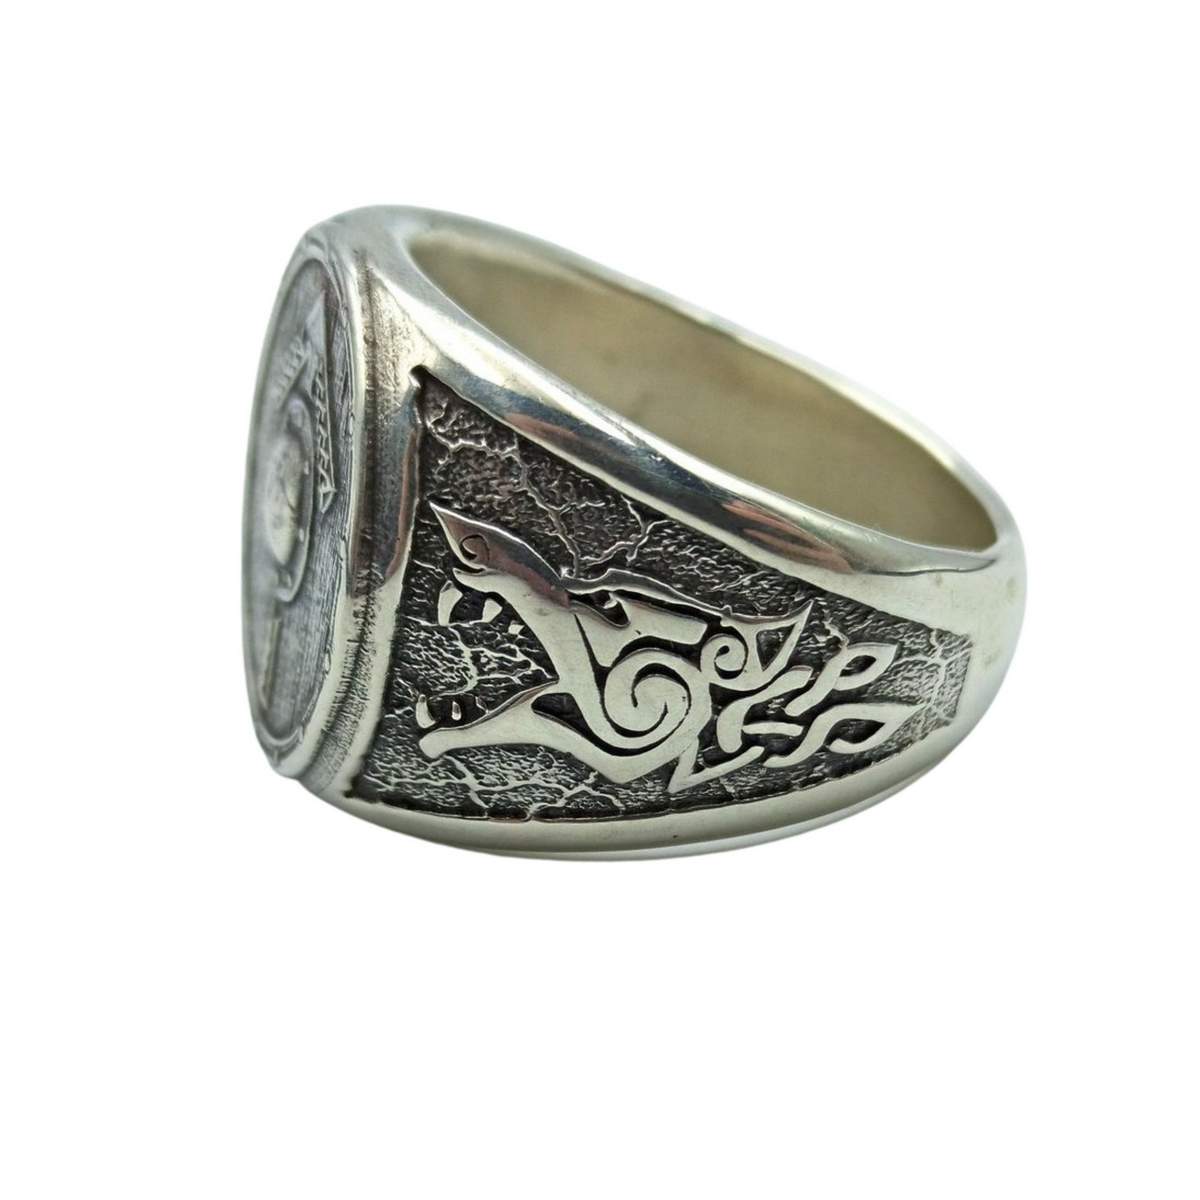 Tiwaz rune on viking shield signet silver ring